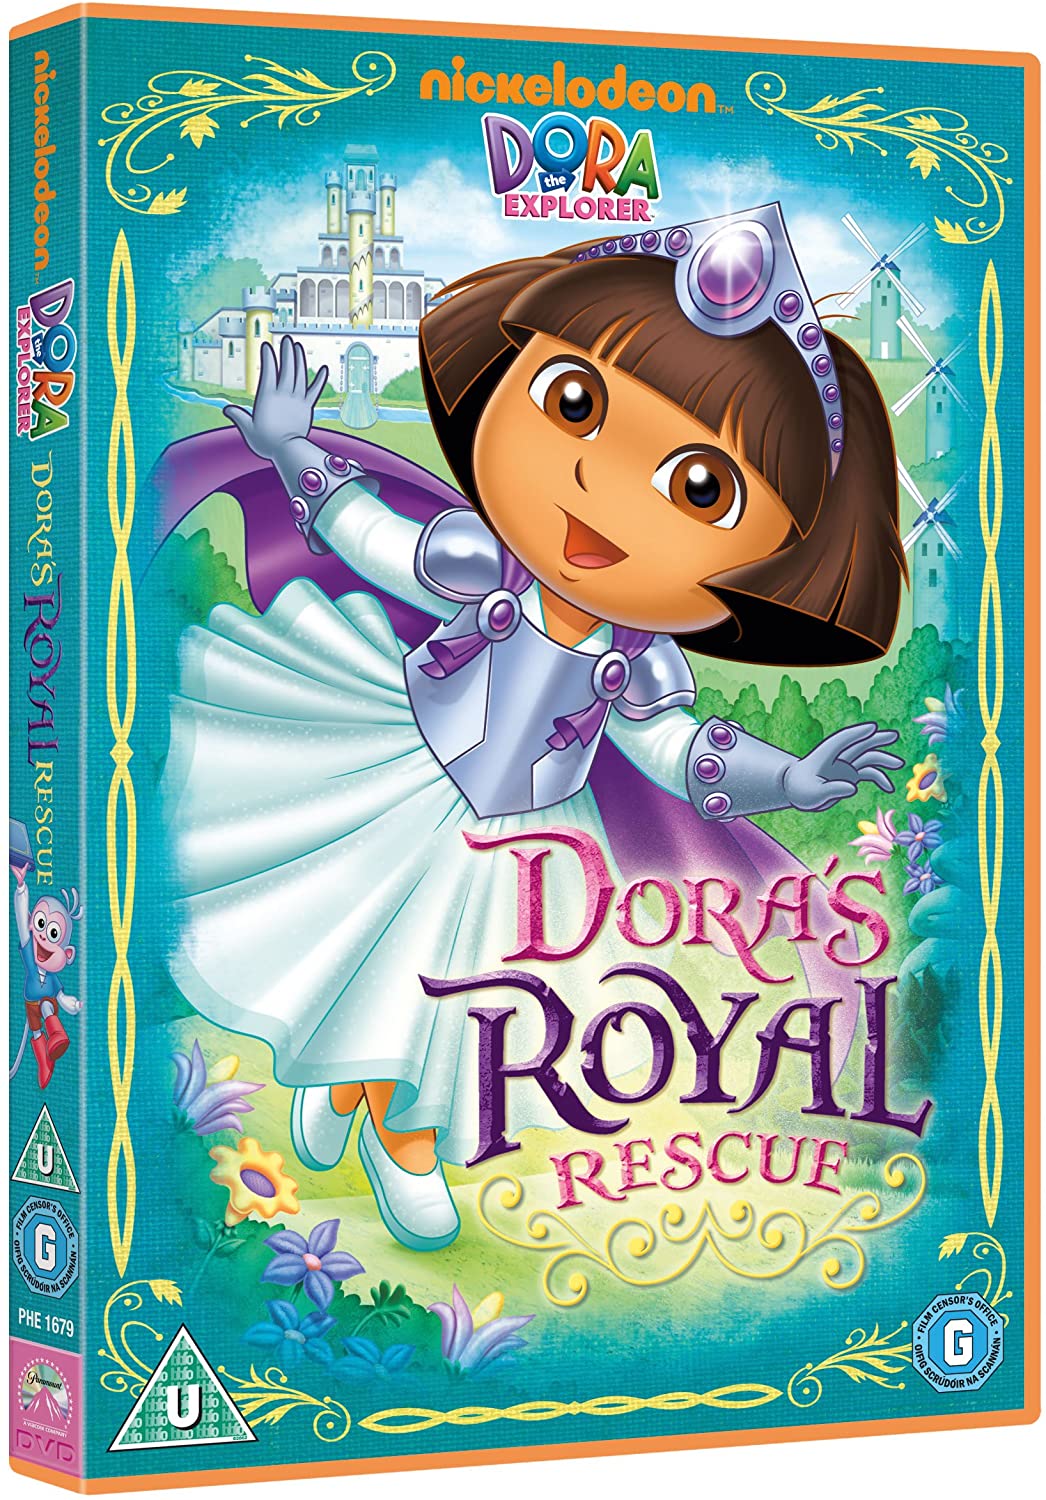 Dora The Explorer: Royal Rescue - Animation [DVD]